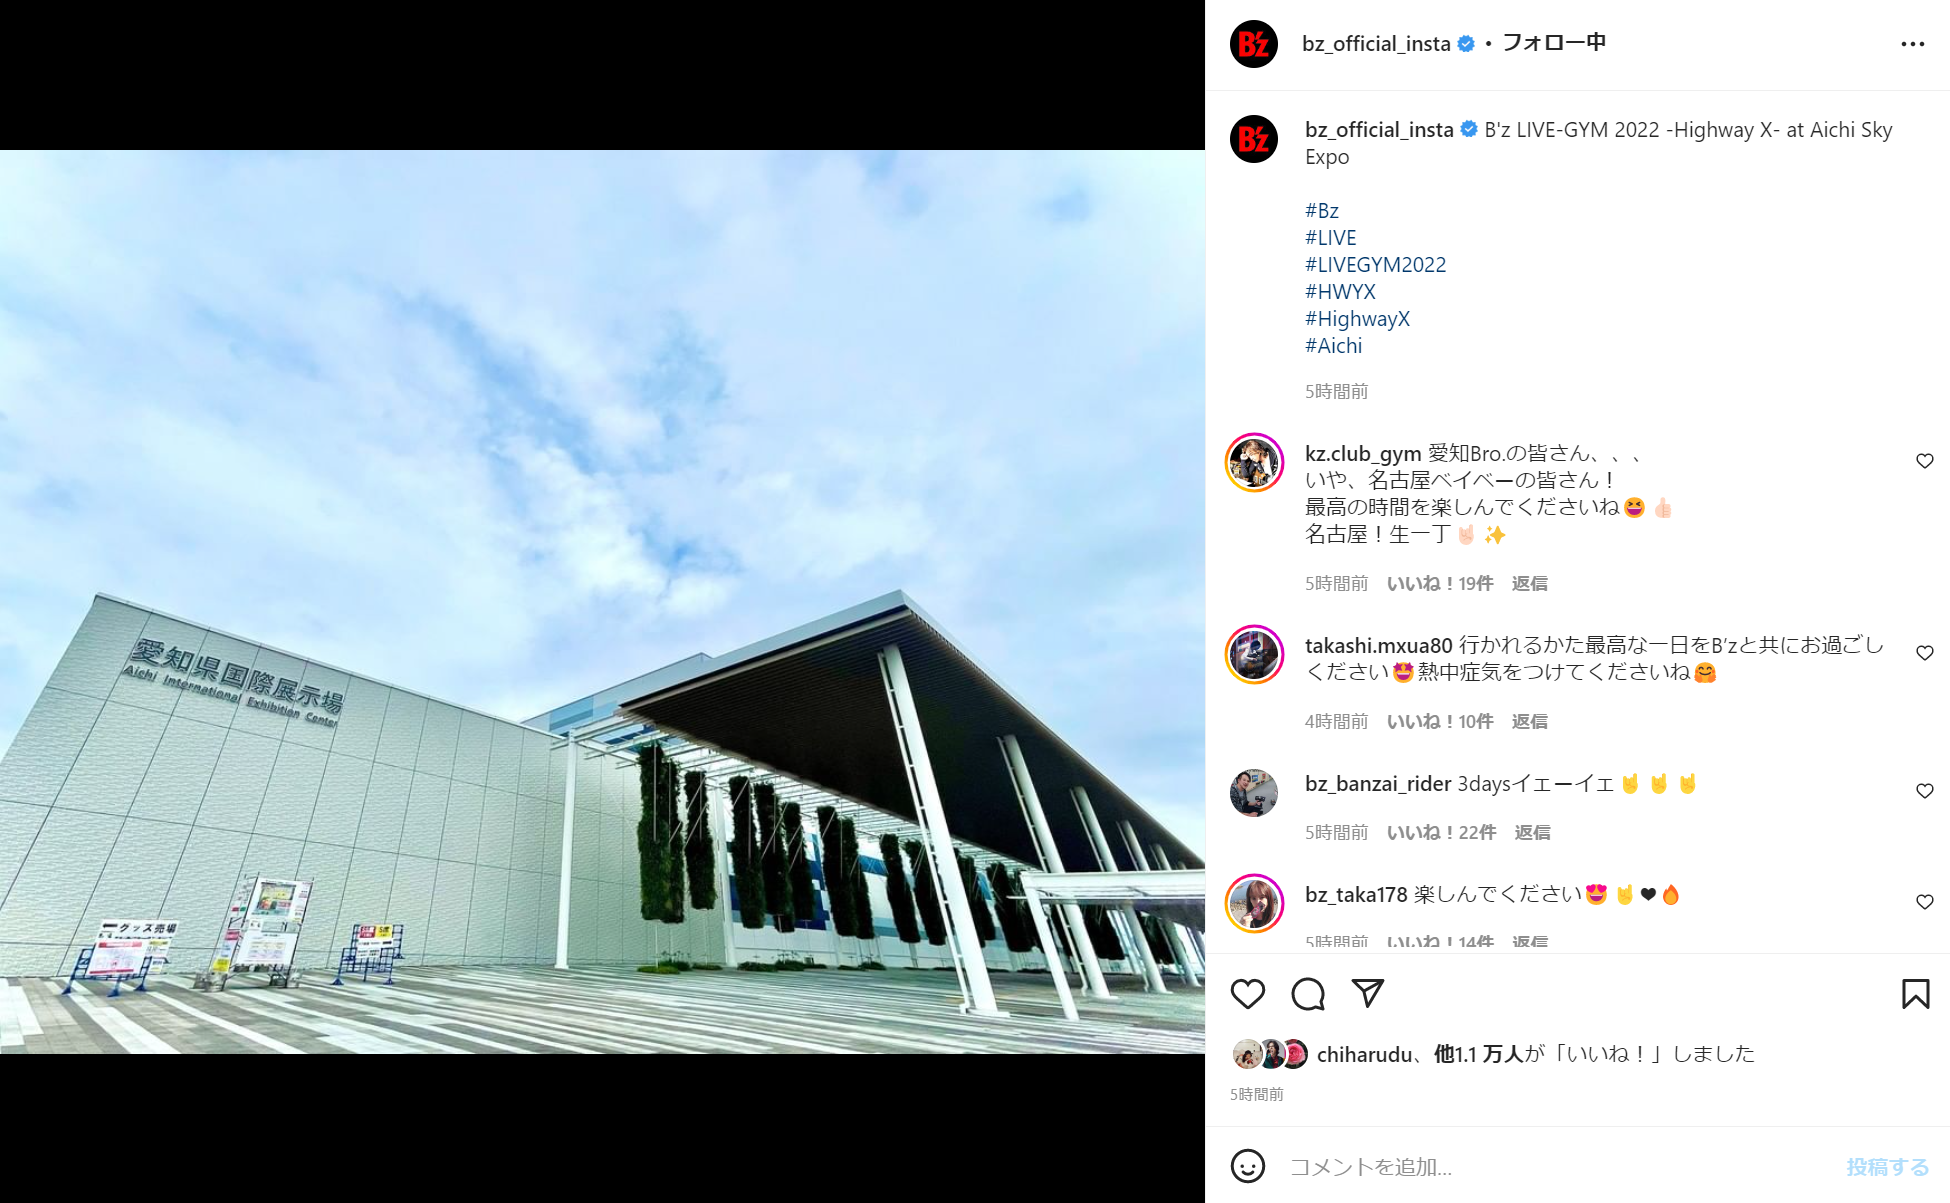 B'zの公式Instagramで公開されたAichi Sky Expo(愛知県国際展示場) ホールAの外観の写真